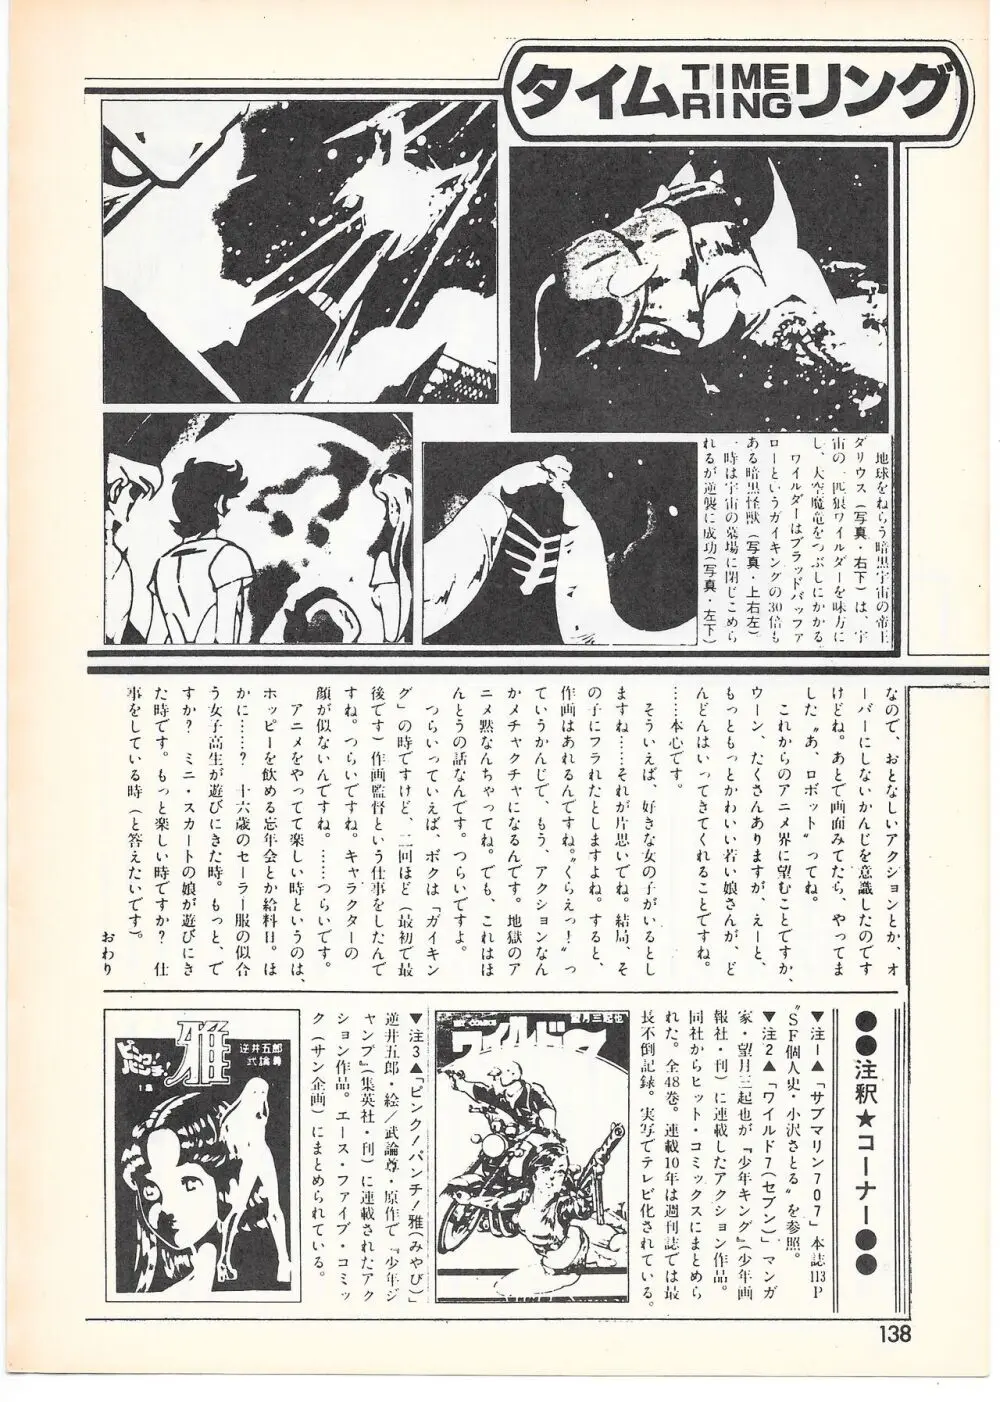 THE ANIMATOR 1 金田伊功特集号 - page133